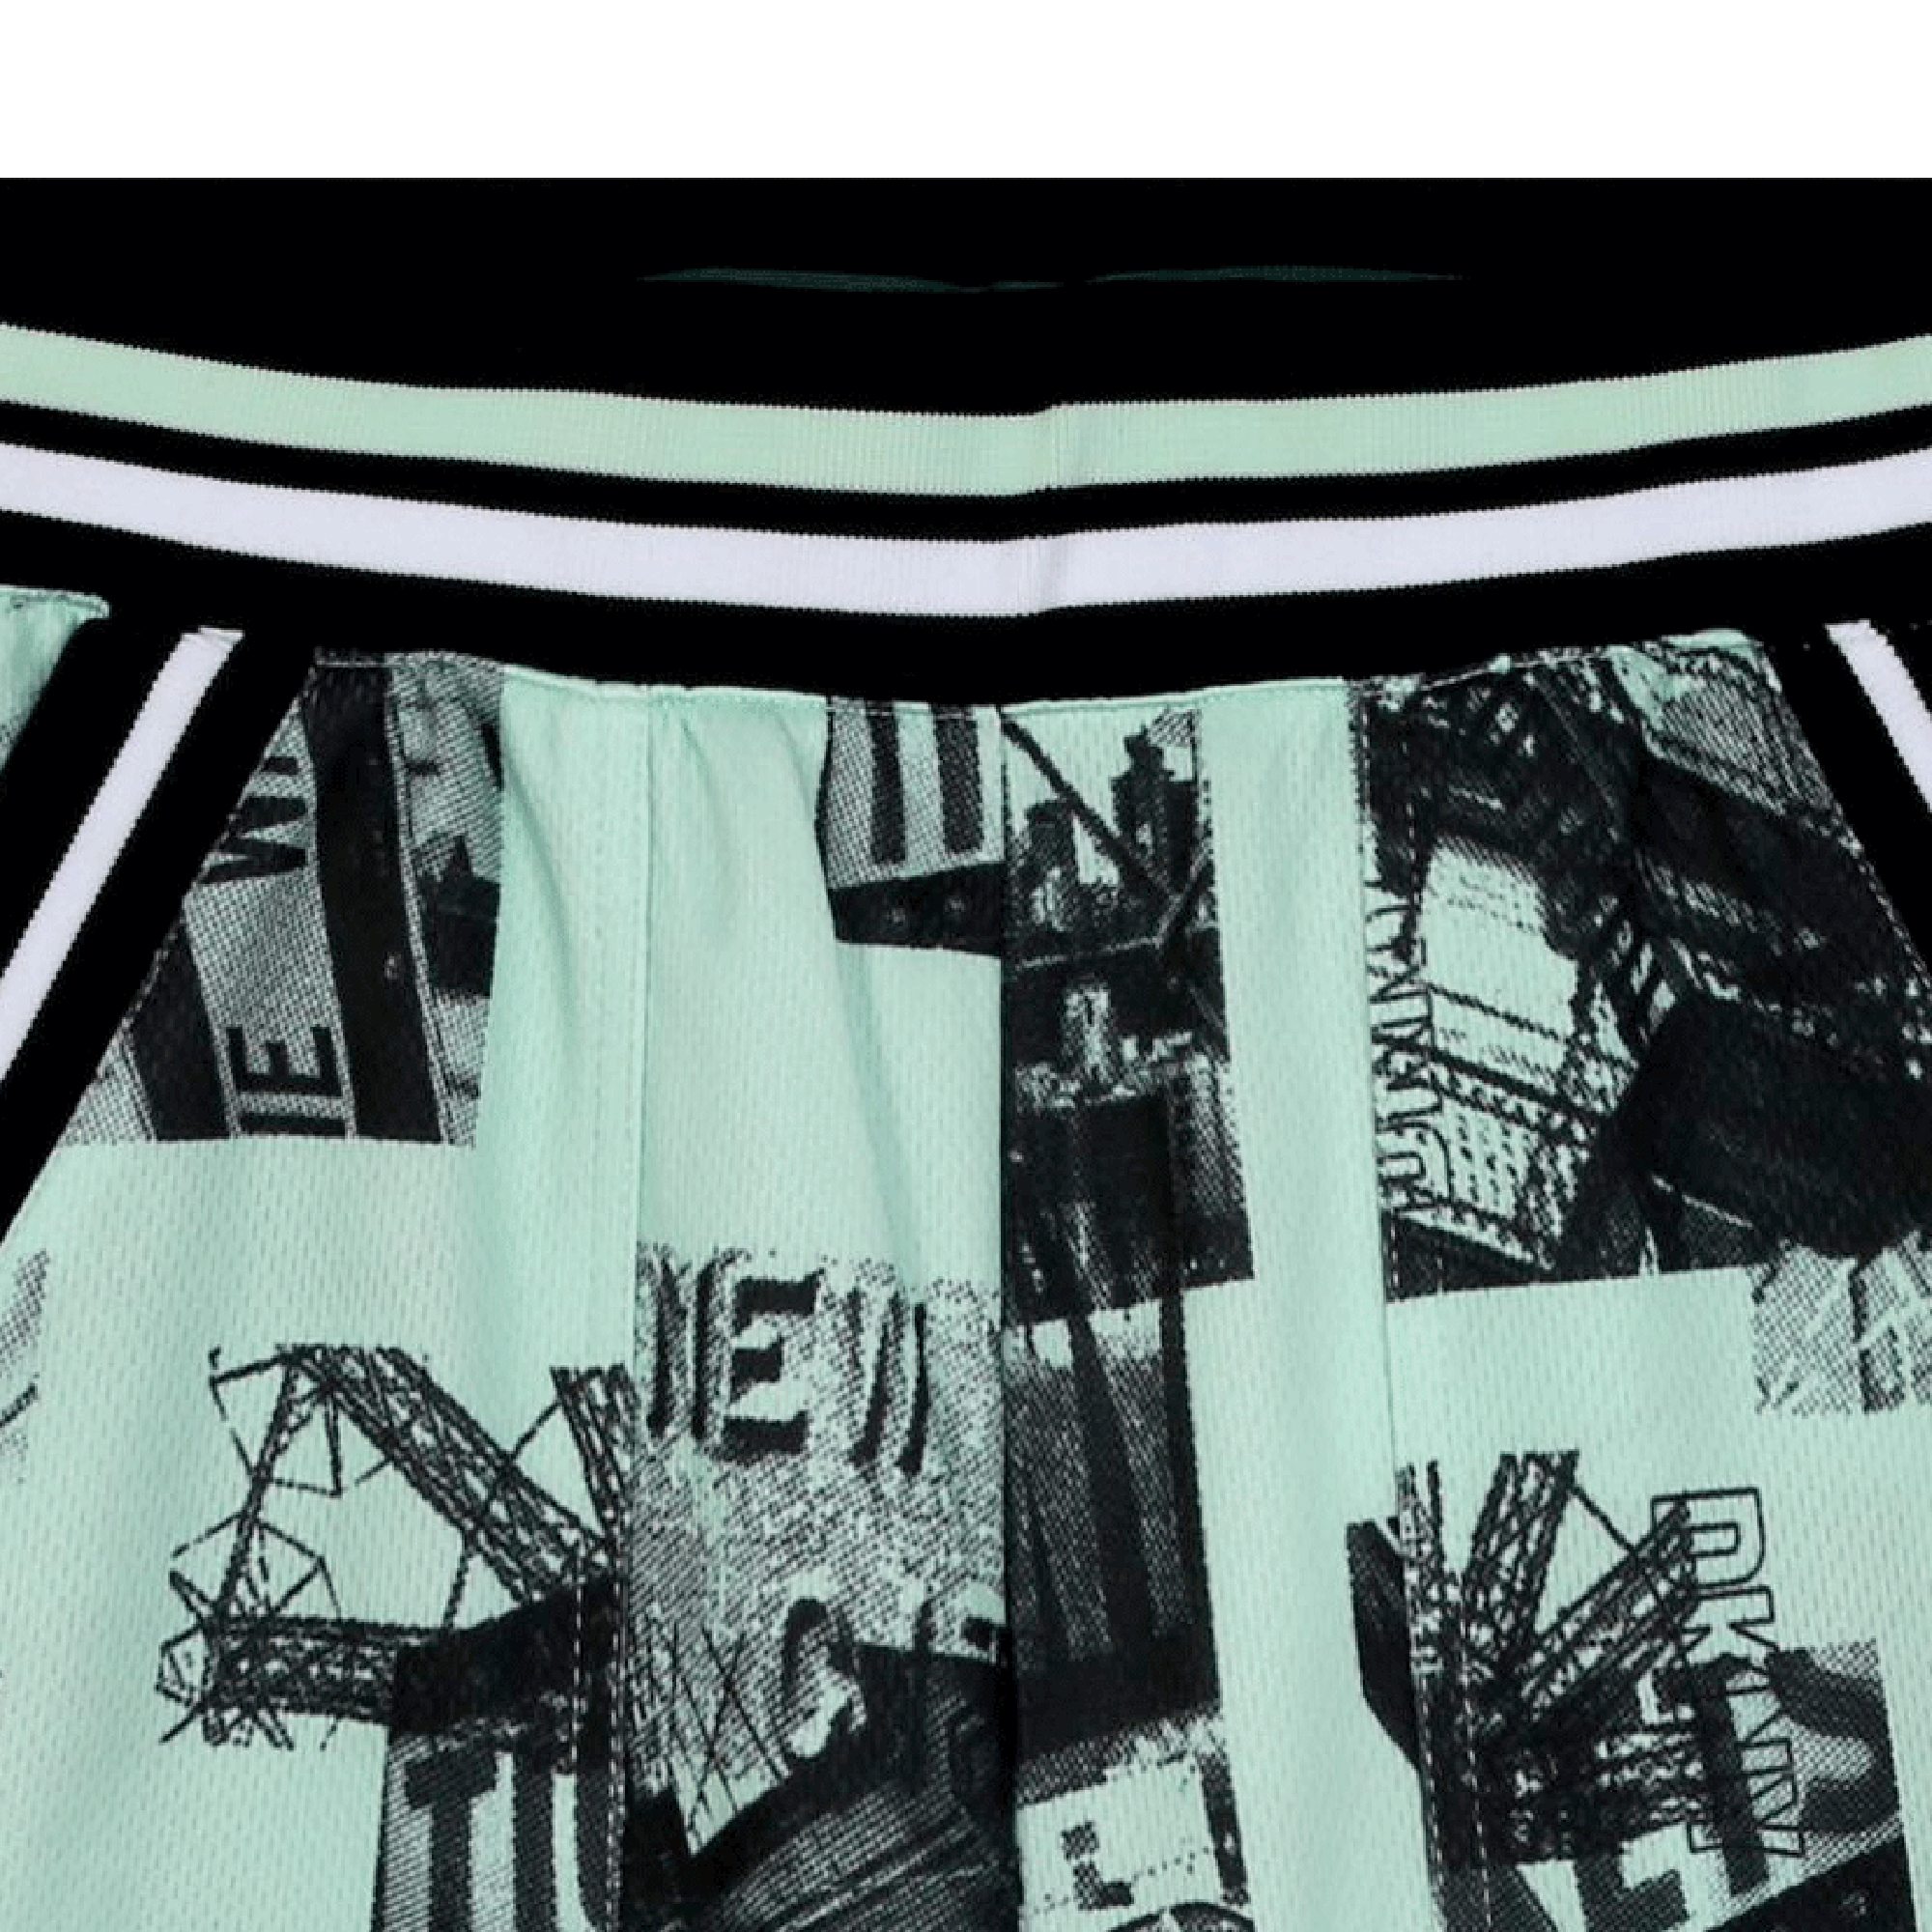 Printed mesh shorts DKNY for BOY